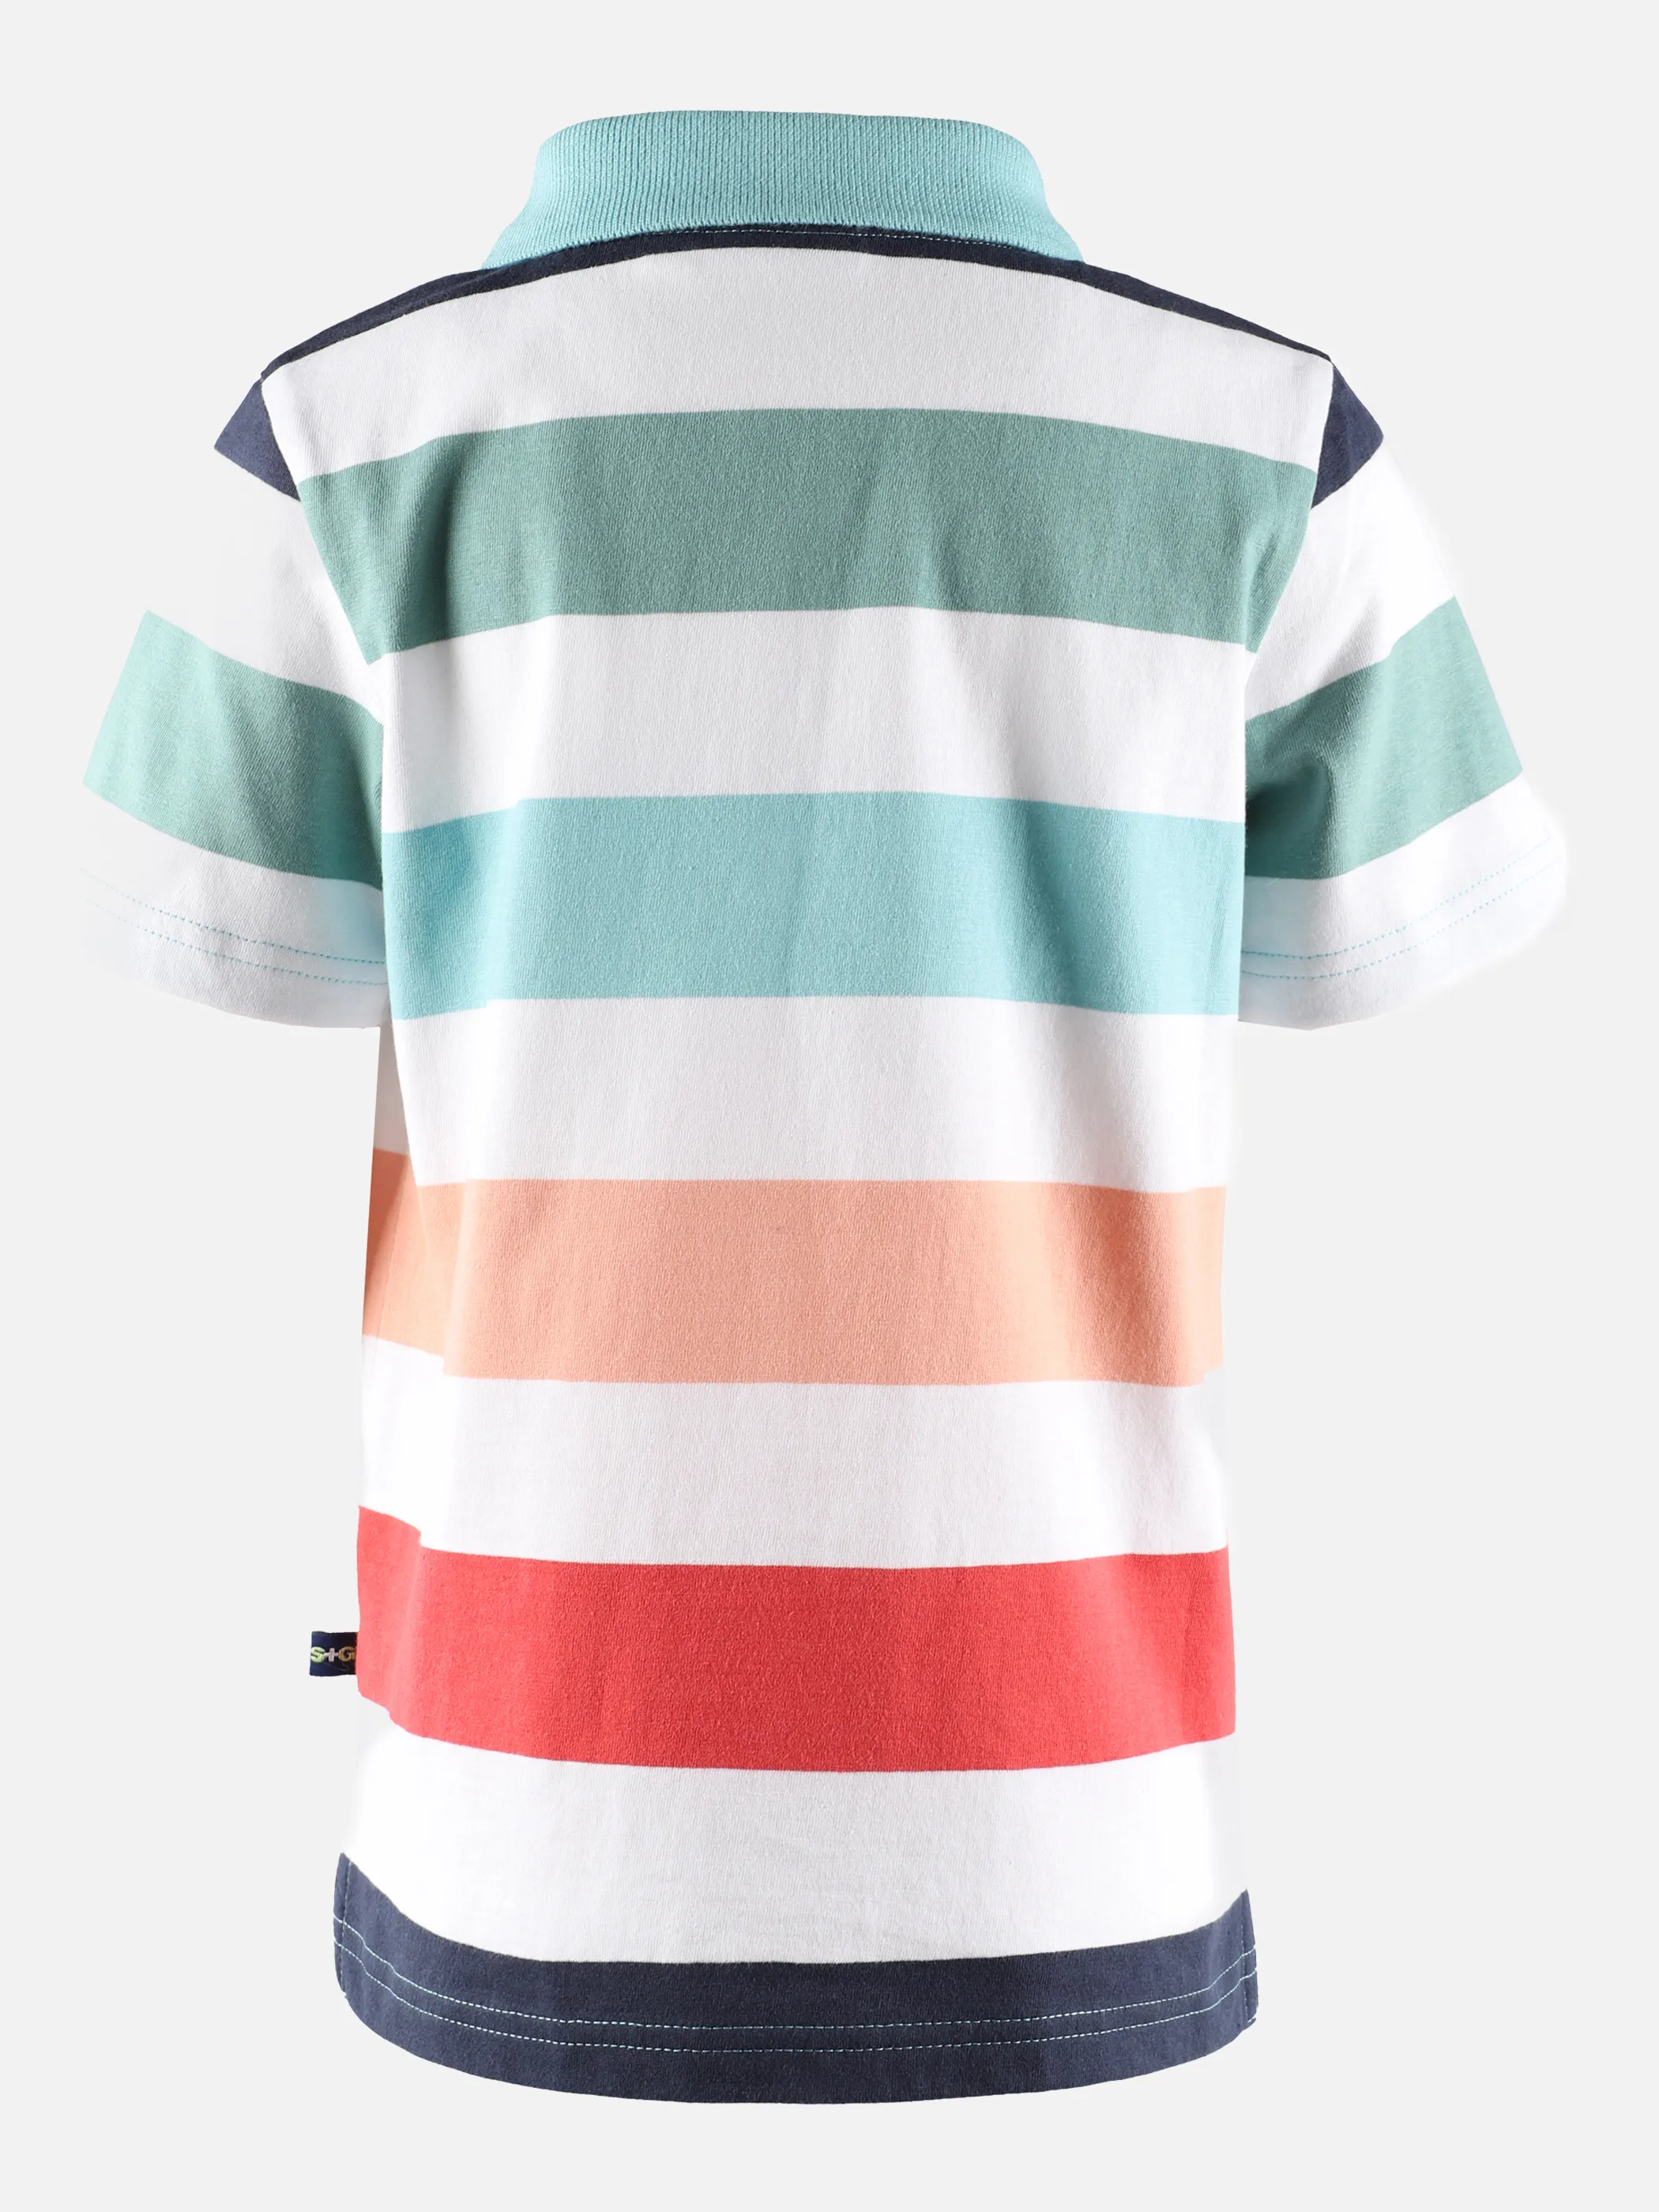 Stop + Go KJ Polo Shirt gestreift in sechs Farben Bunt 875500 MULTICOLOR 2